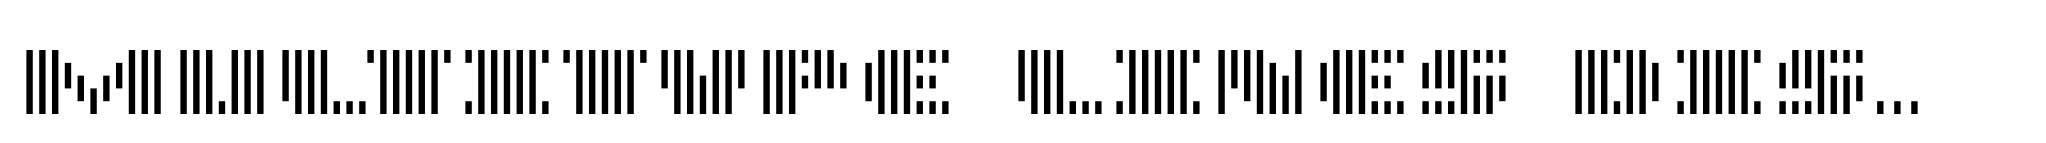 MultiType Lines Display Wide Bold 2 image